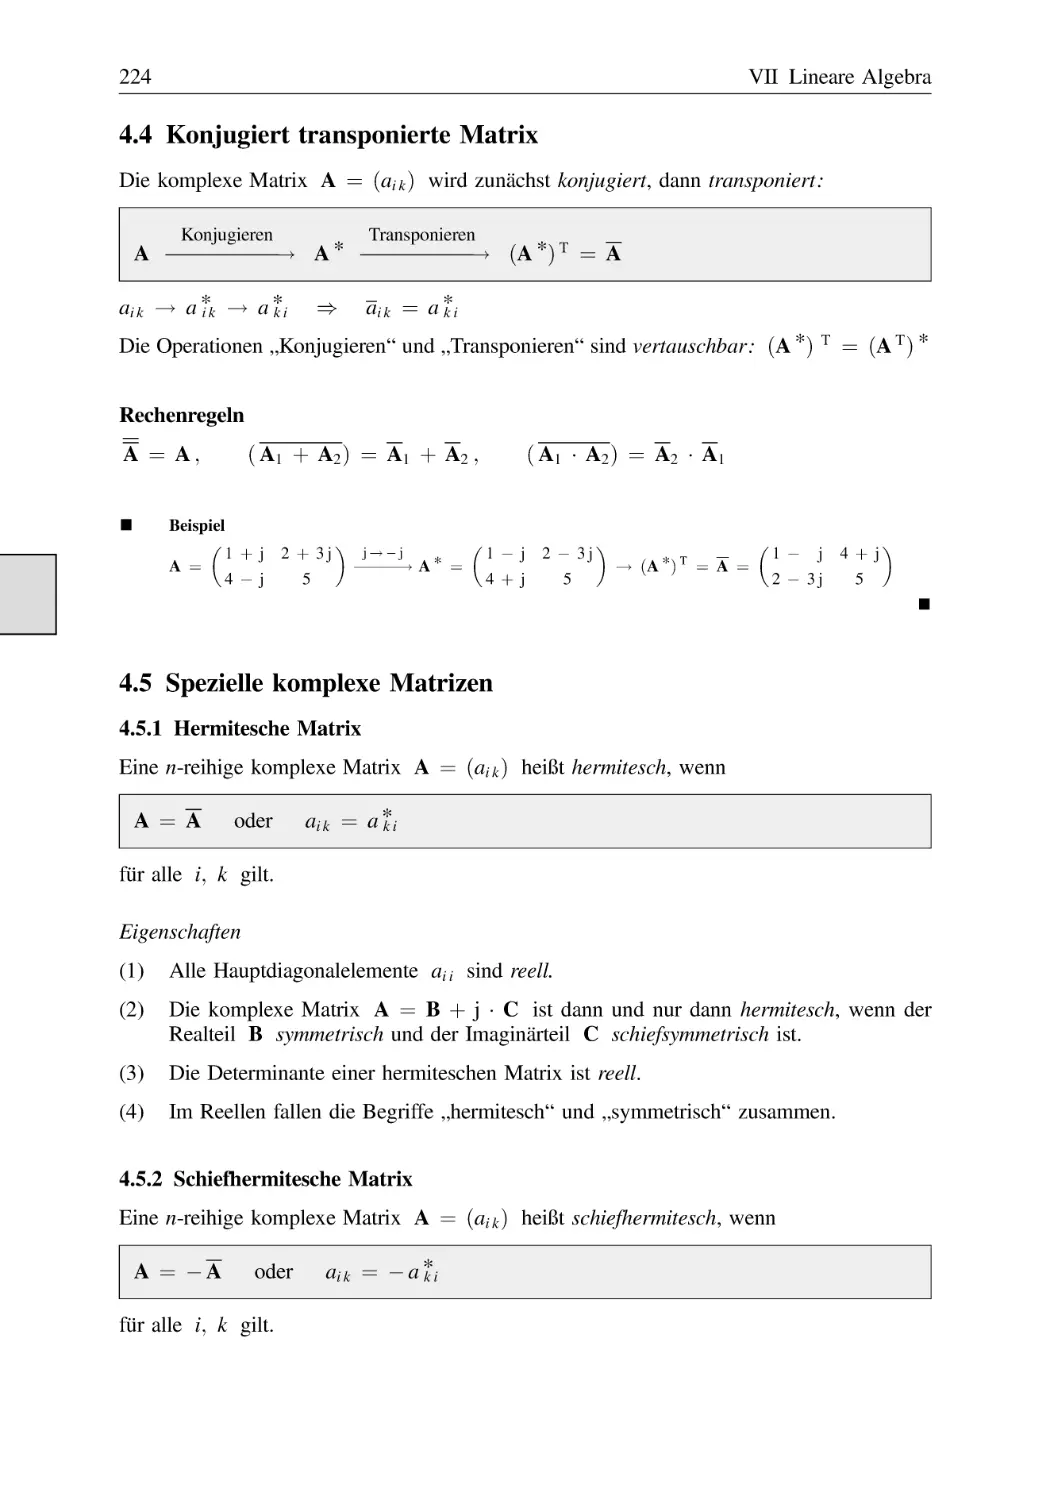 4.4 Konjugiert transponierte Matrix
4.5 Spezielle komplexe Matrizen
4.5.1 Hermitesche Matrix
4.5.2 Schiefhermitesche Matrix